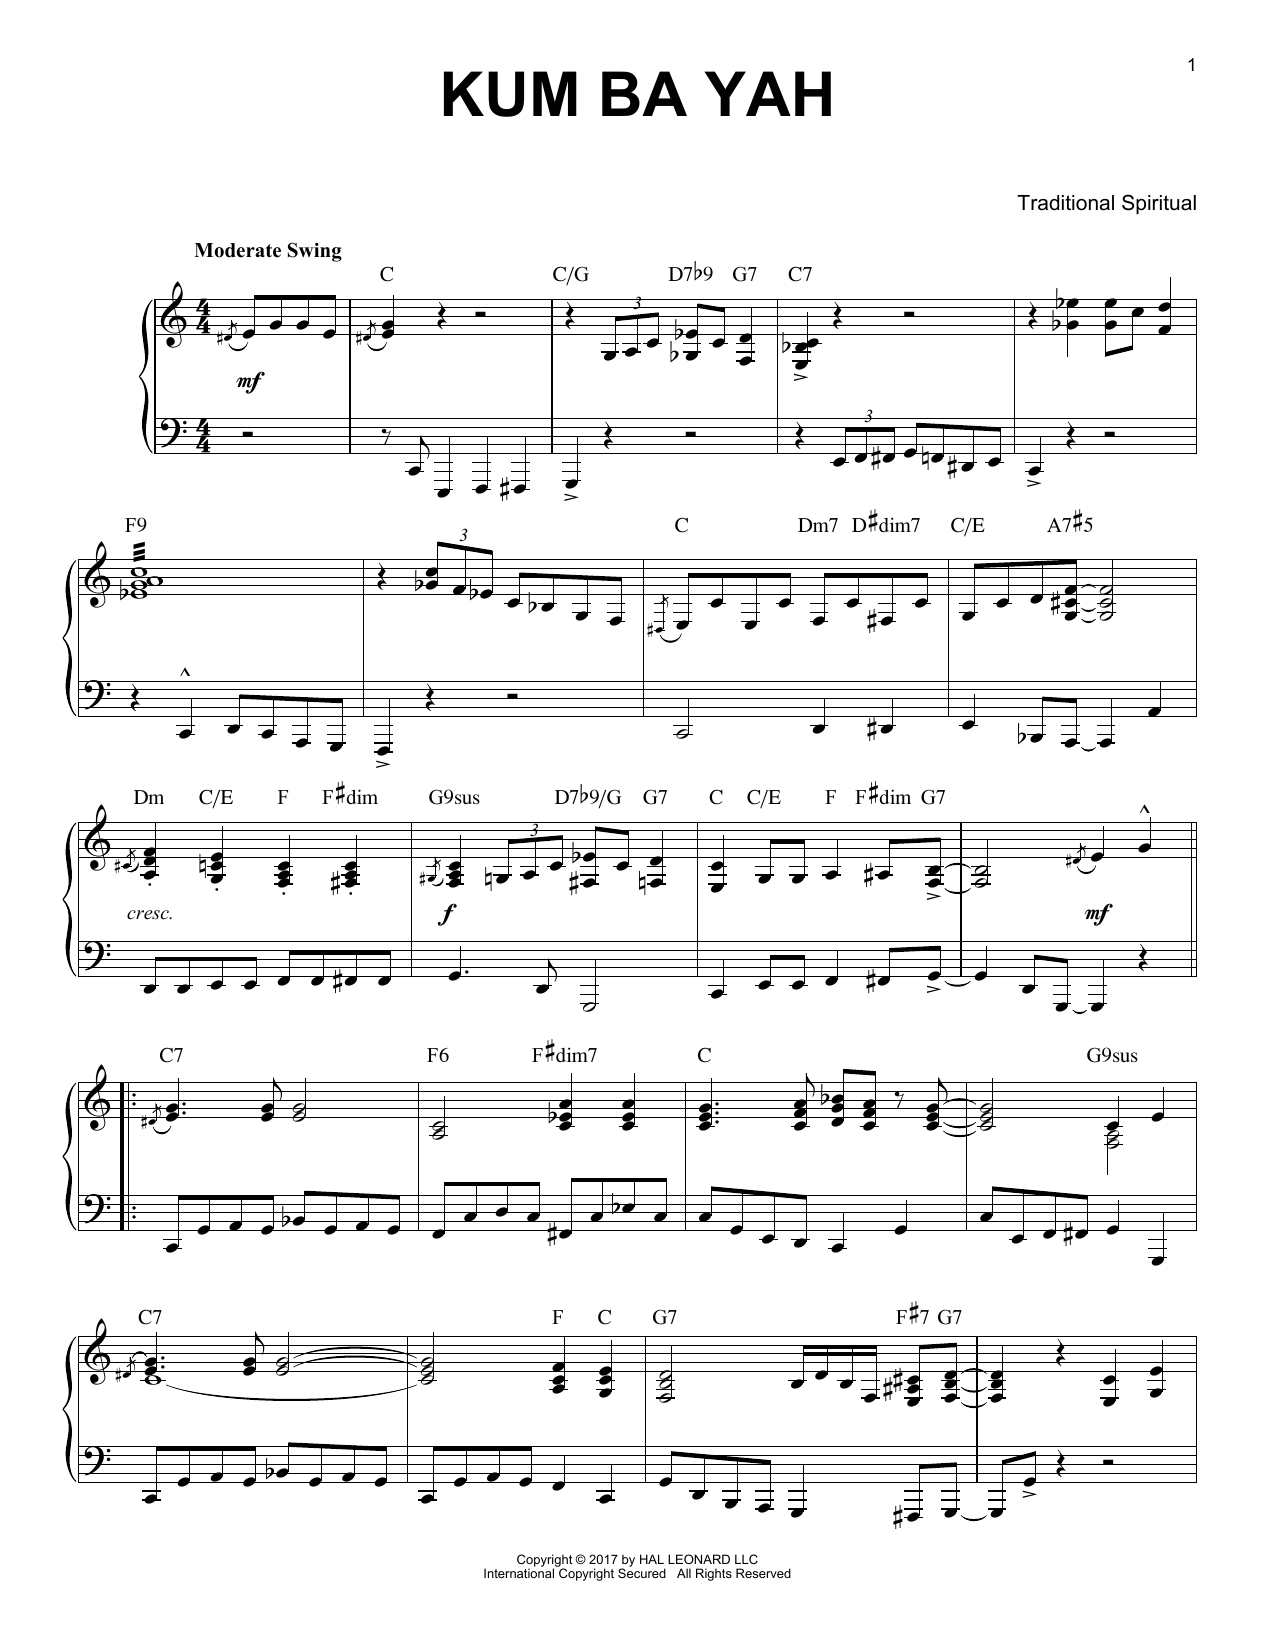 Traditional Spiritual Kum Ba Yah [Jazz version] Sheet Music Notes & Chords for Piano - Download or Print PDF